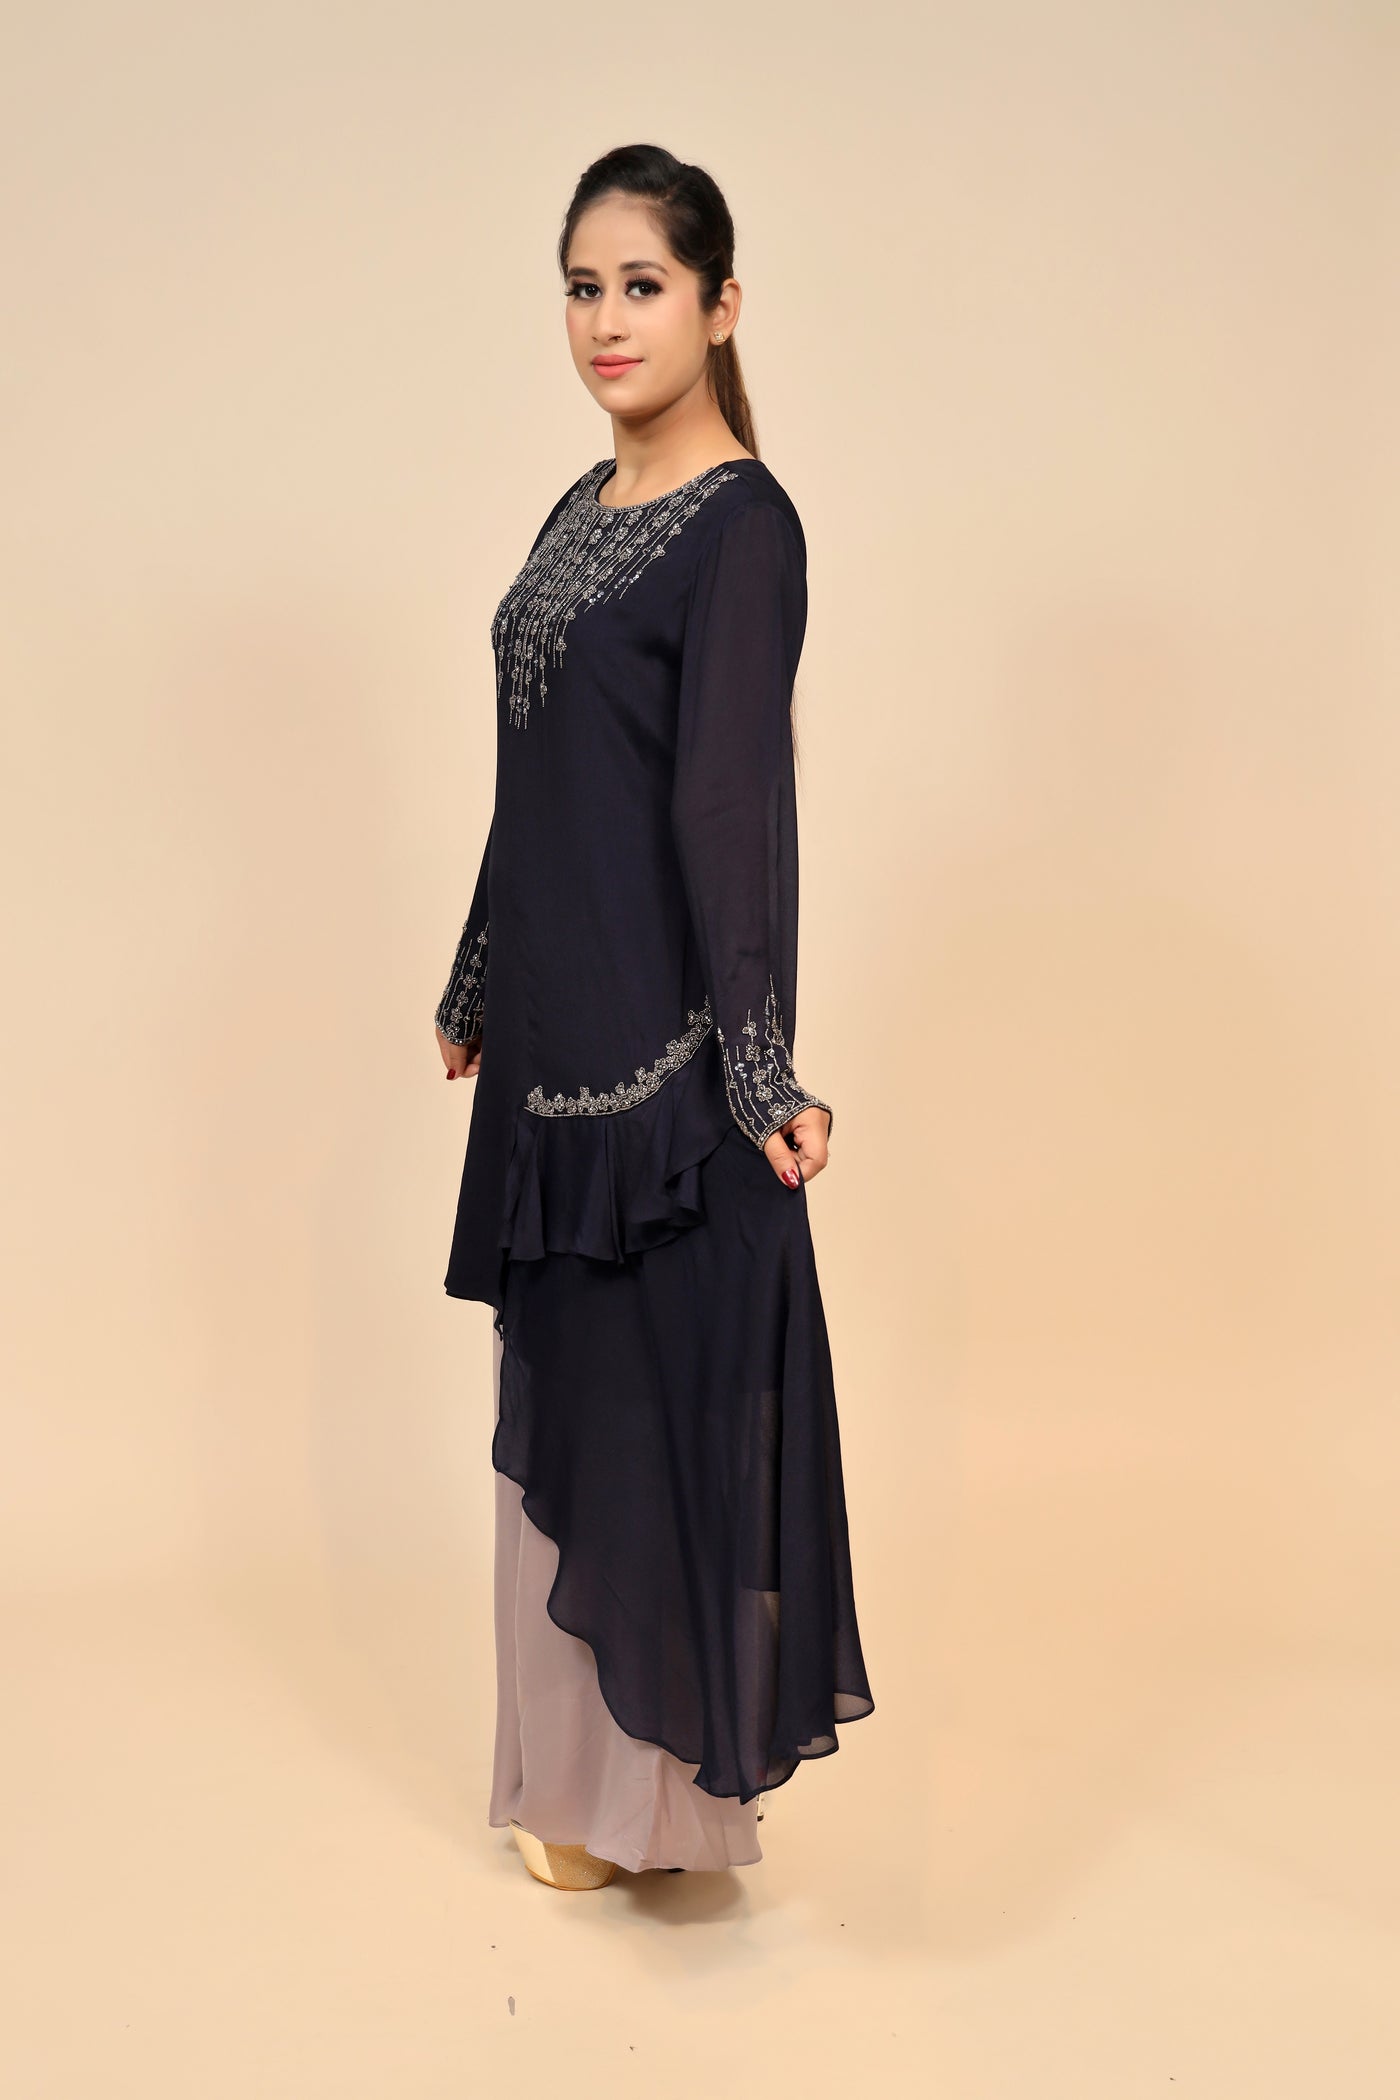 model posing wearing navy blue chinon dress